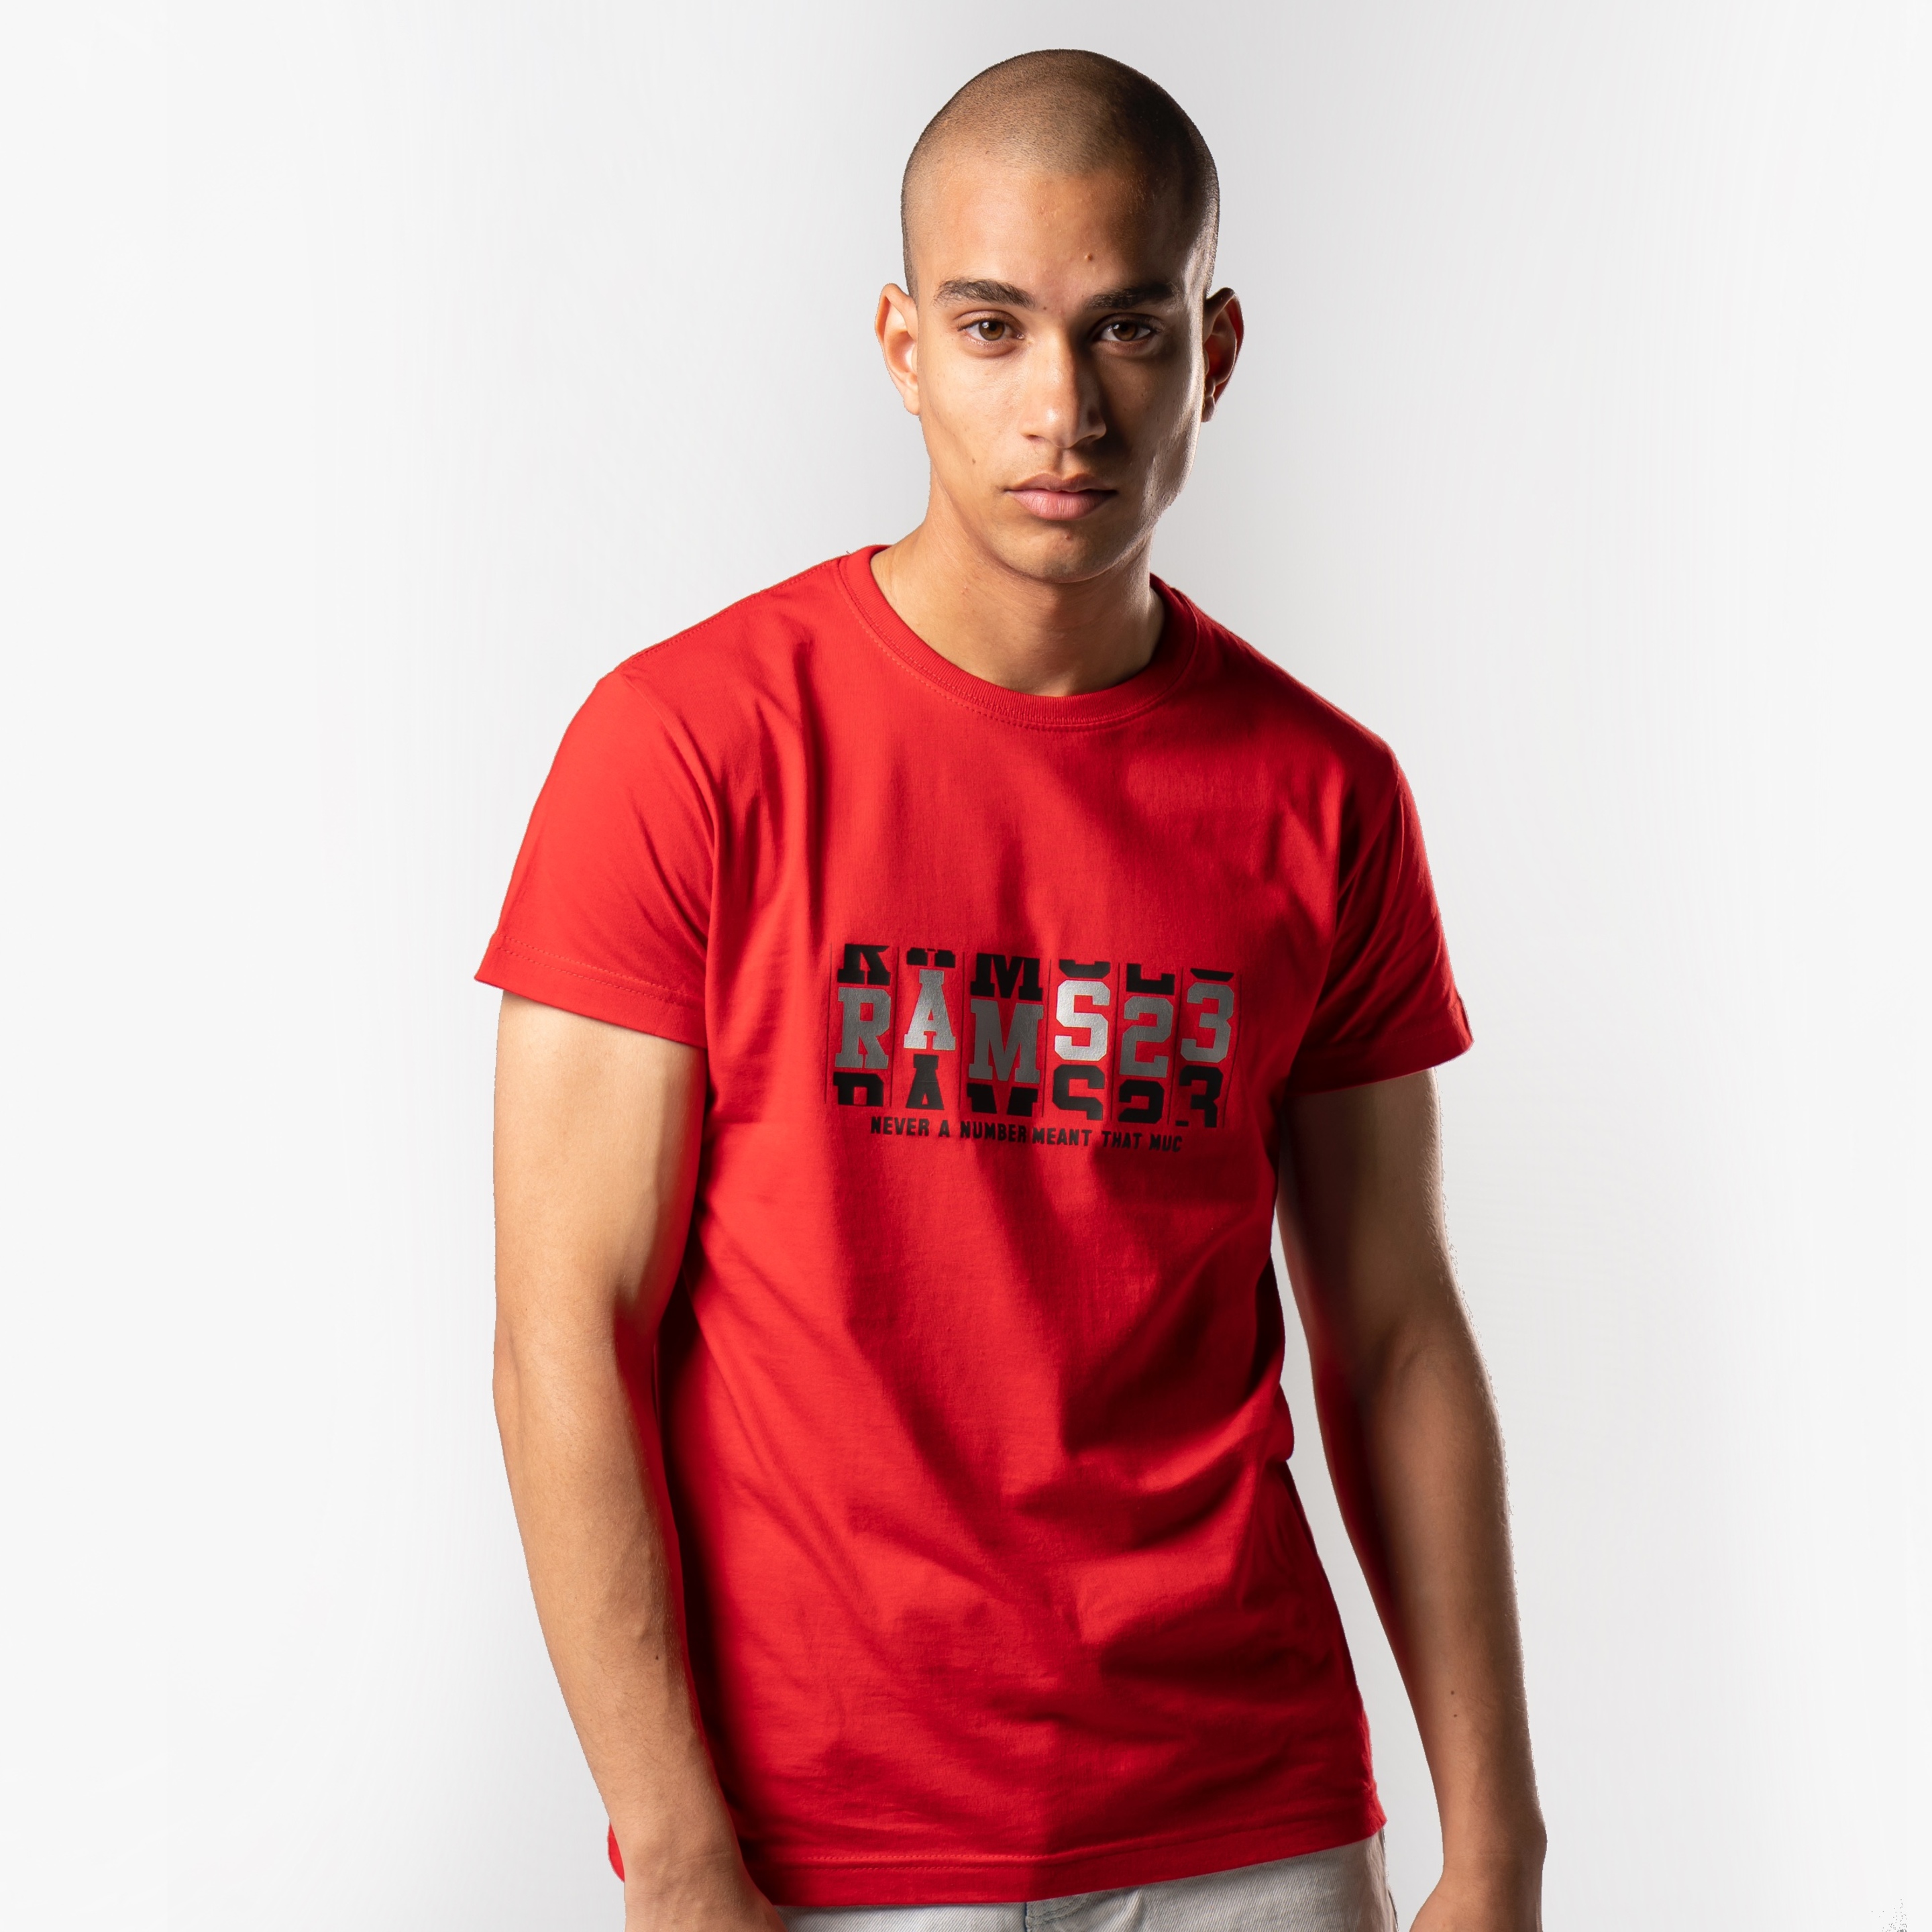 Camiseta Machine Rams 23 - rojo - 